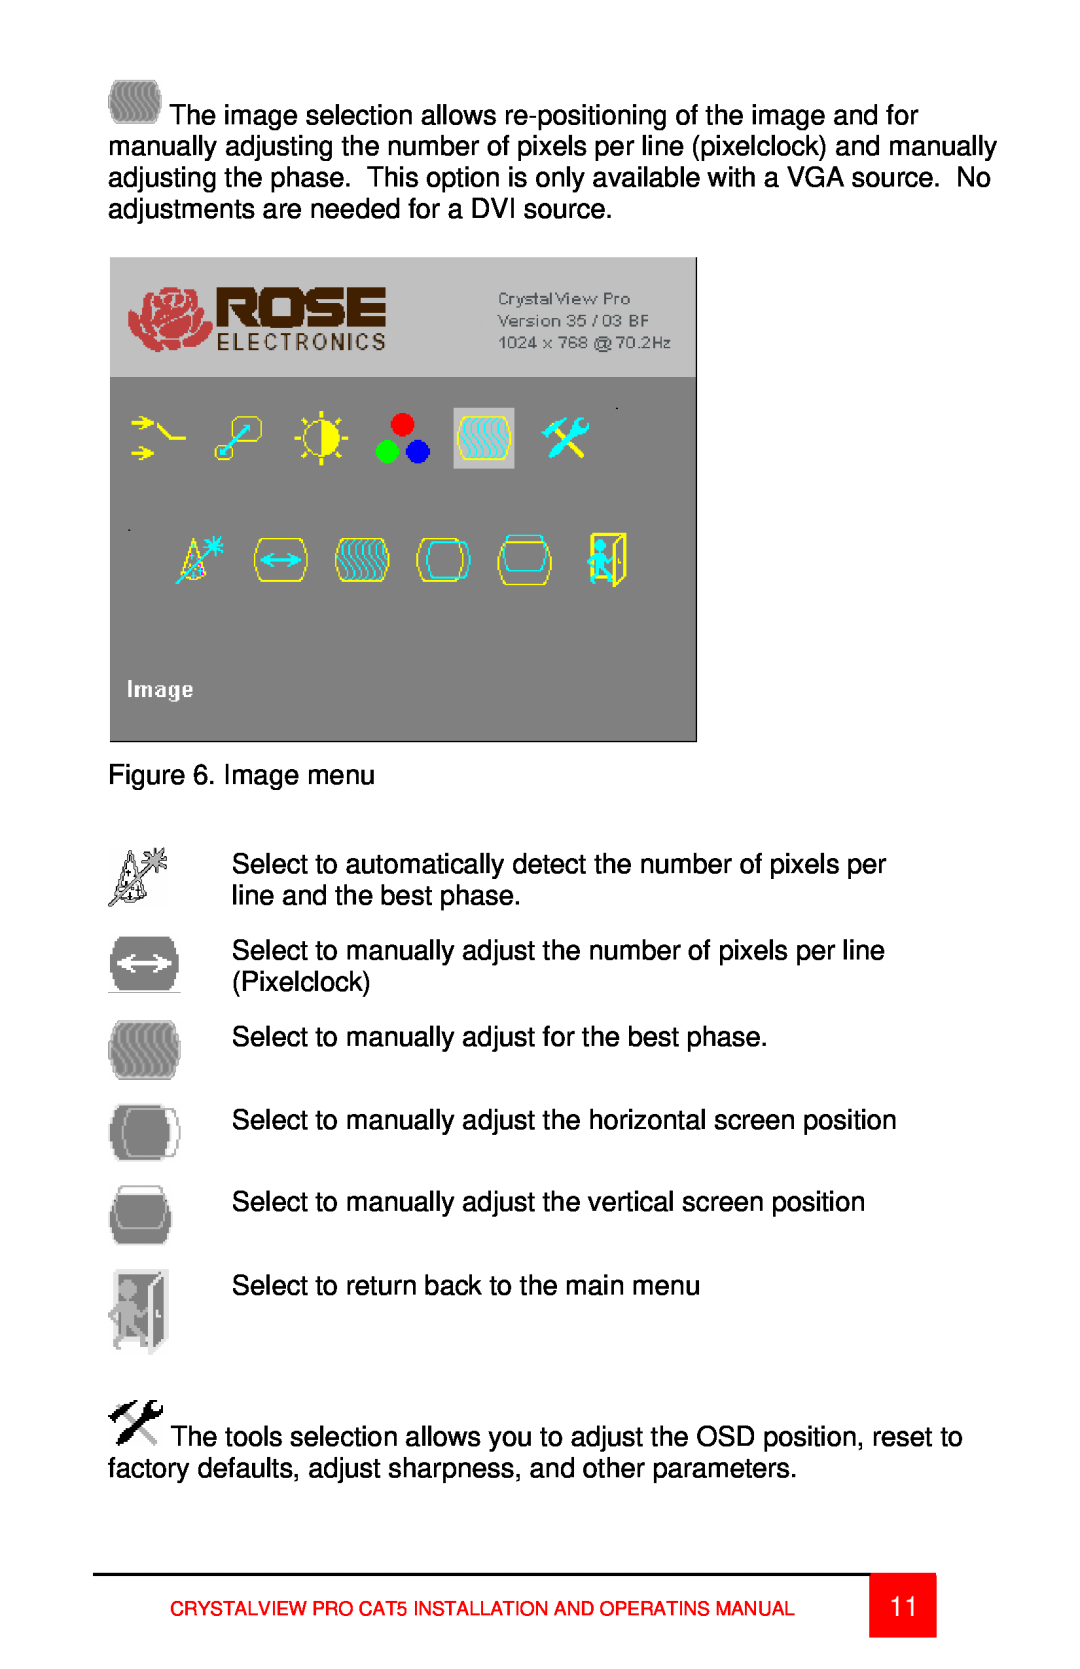 Rose electronic CAT5 manual Image menu 